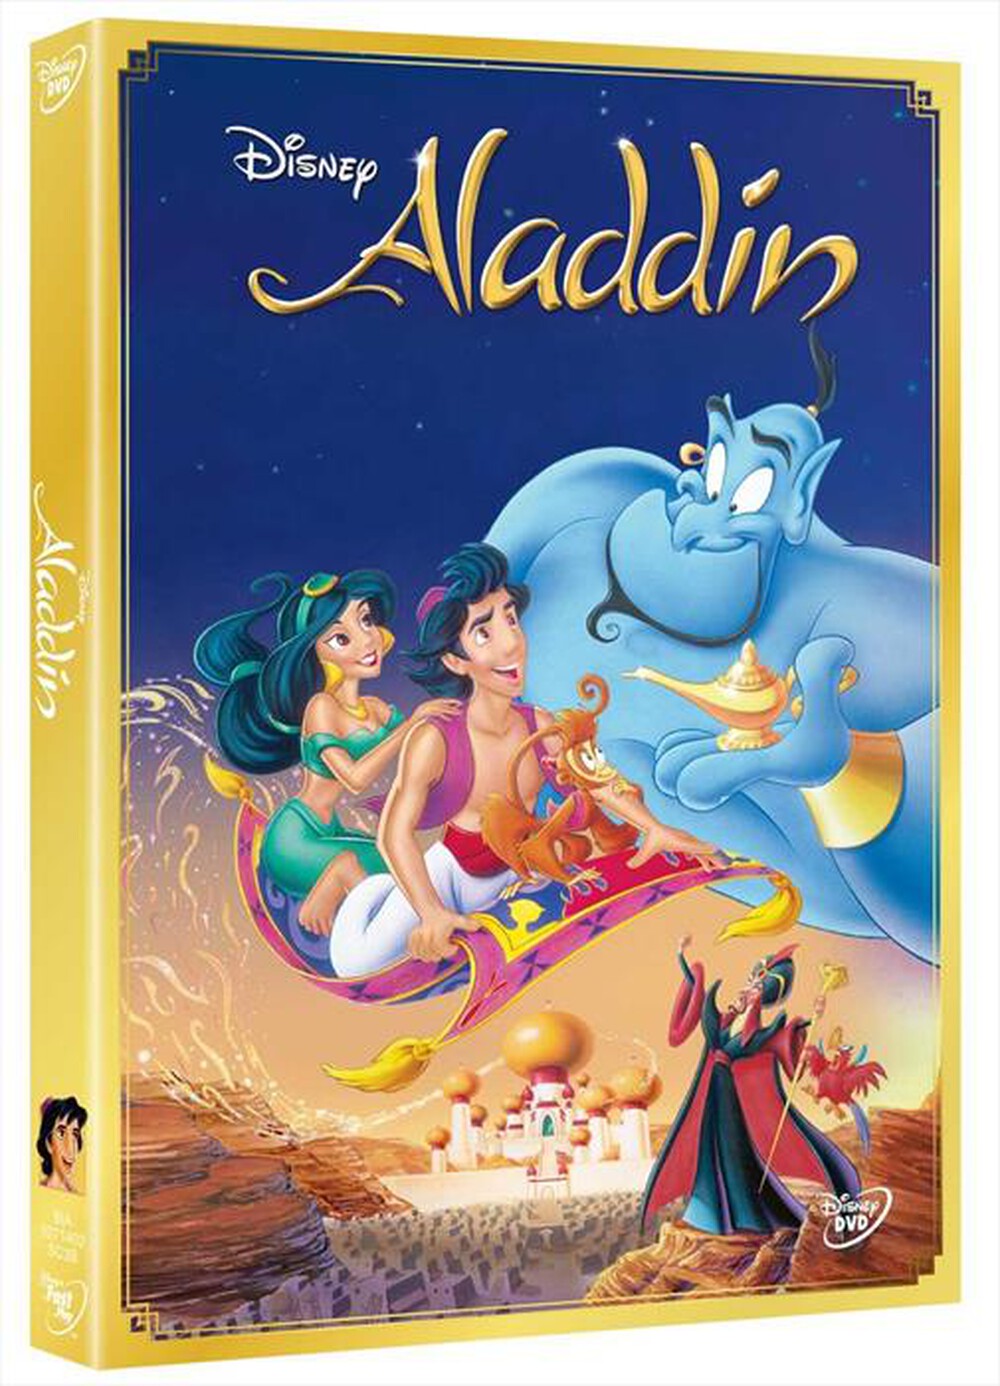 "WALT DISNEY - Aladdin (SE) - "